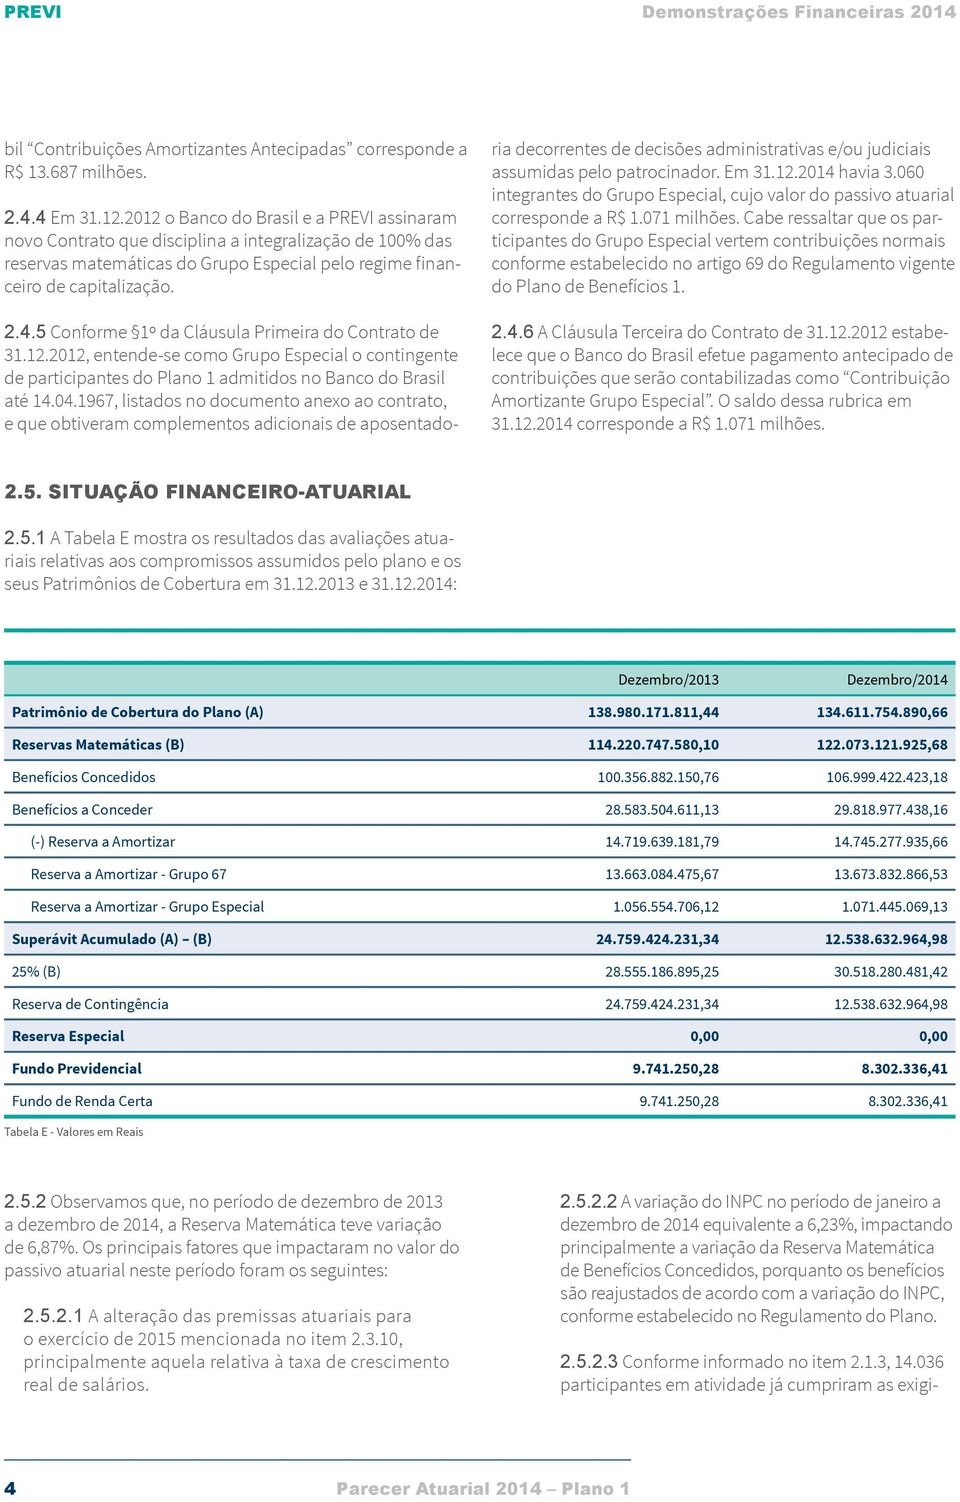 5 Conforme 1º da Cláusula Primeira do Contrato de 31.12.2012, entende-se como Grupo Especial o contingente de participantes do Plano 1 admitidos no Banco do Brasil até 14.04.